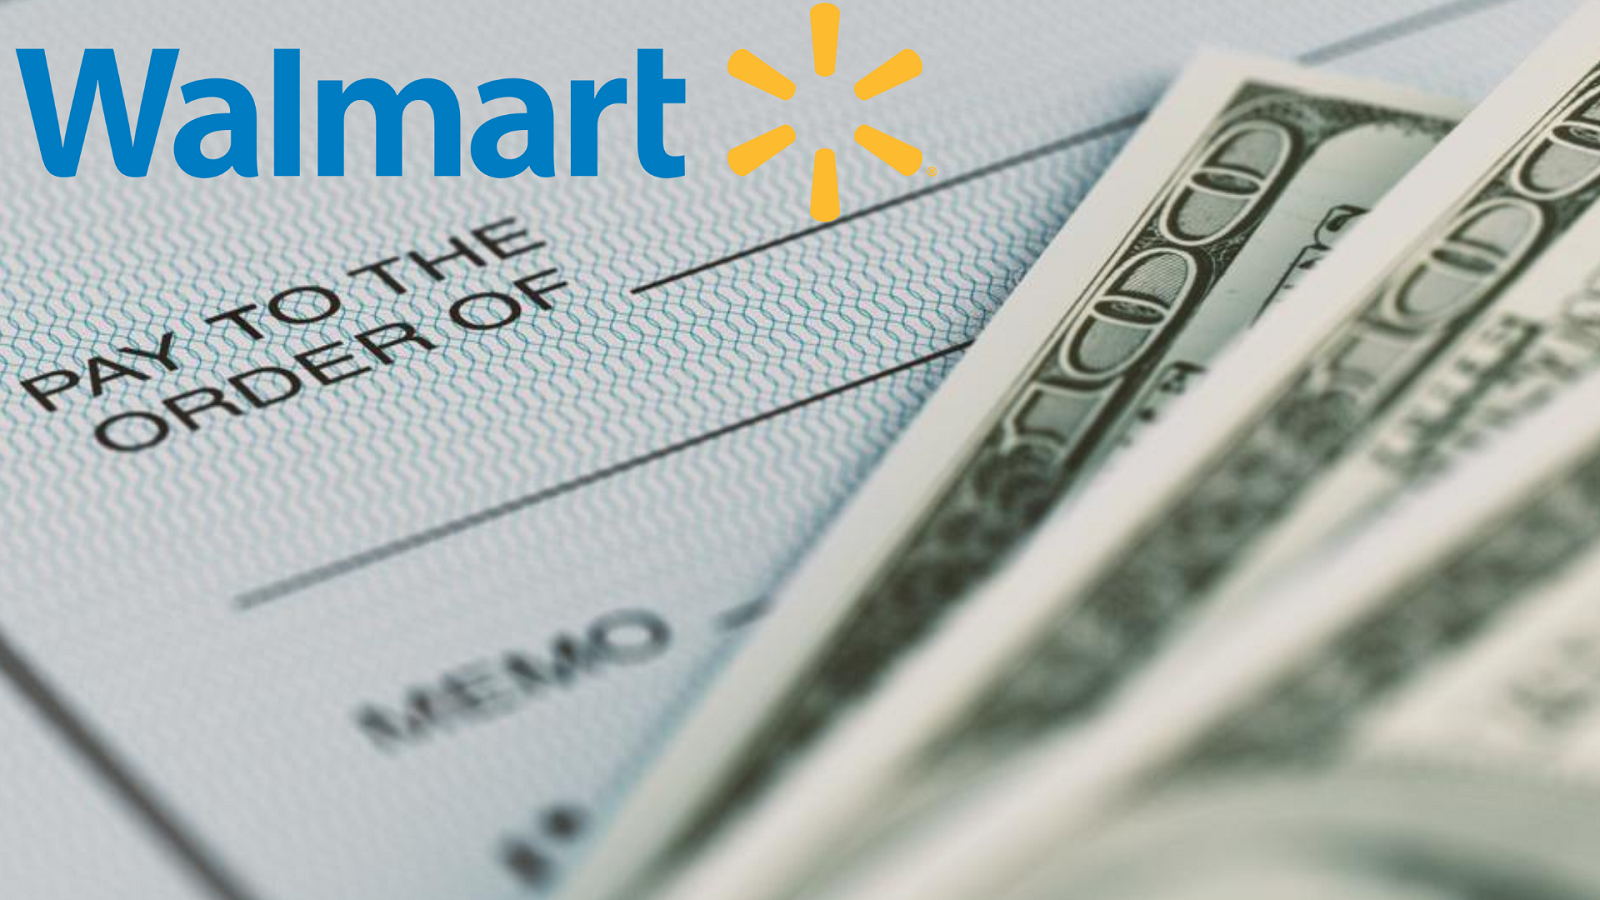 What Time Does Walmart Stop Cashing Checks?